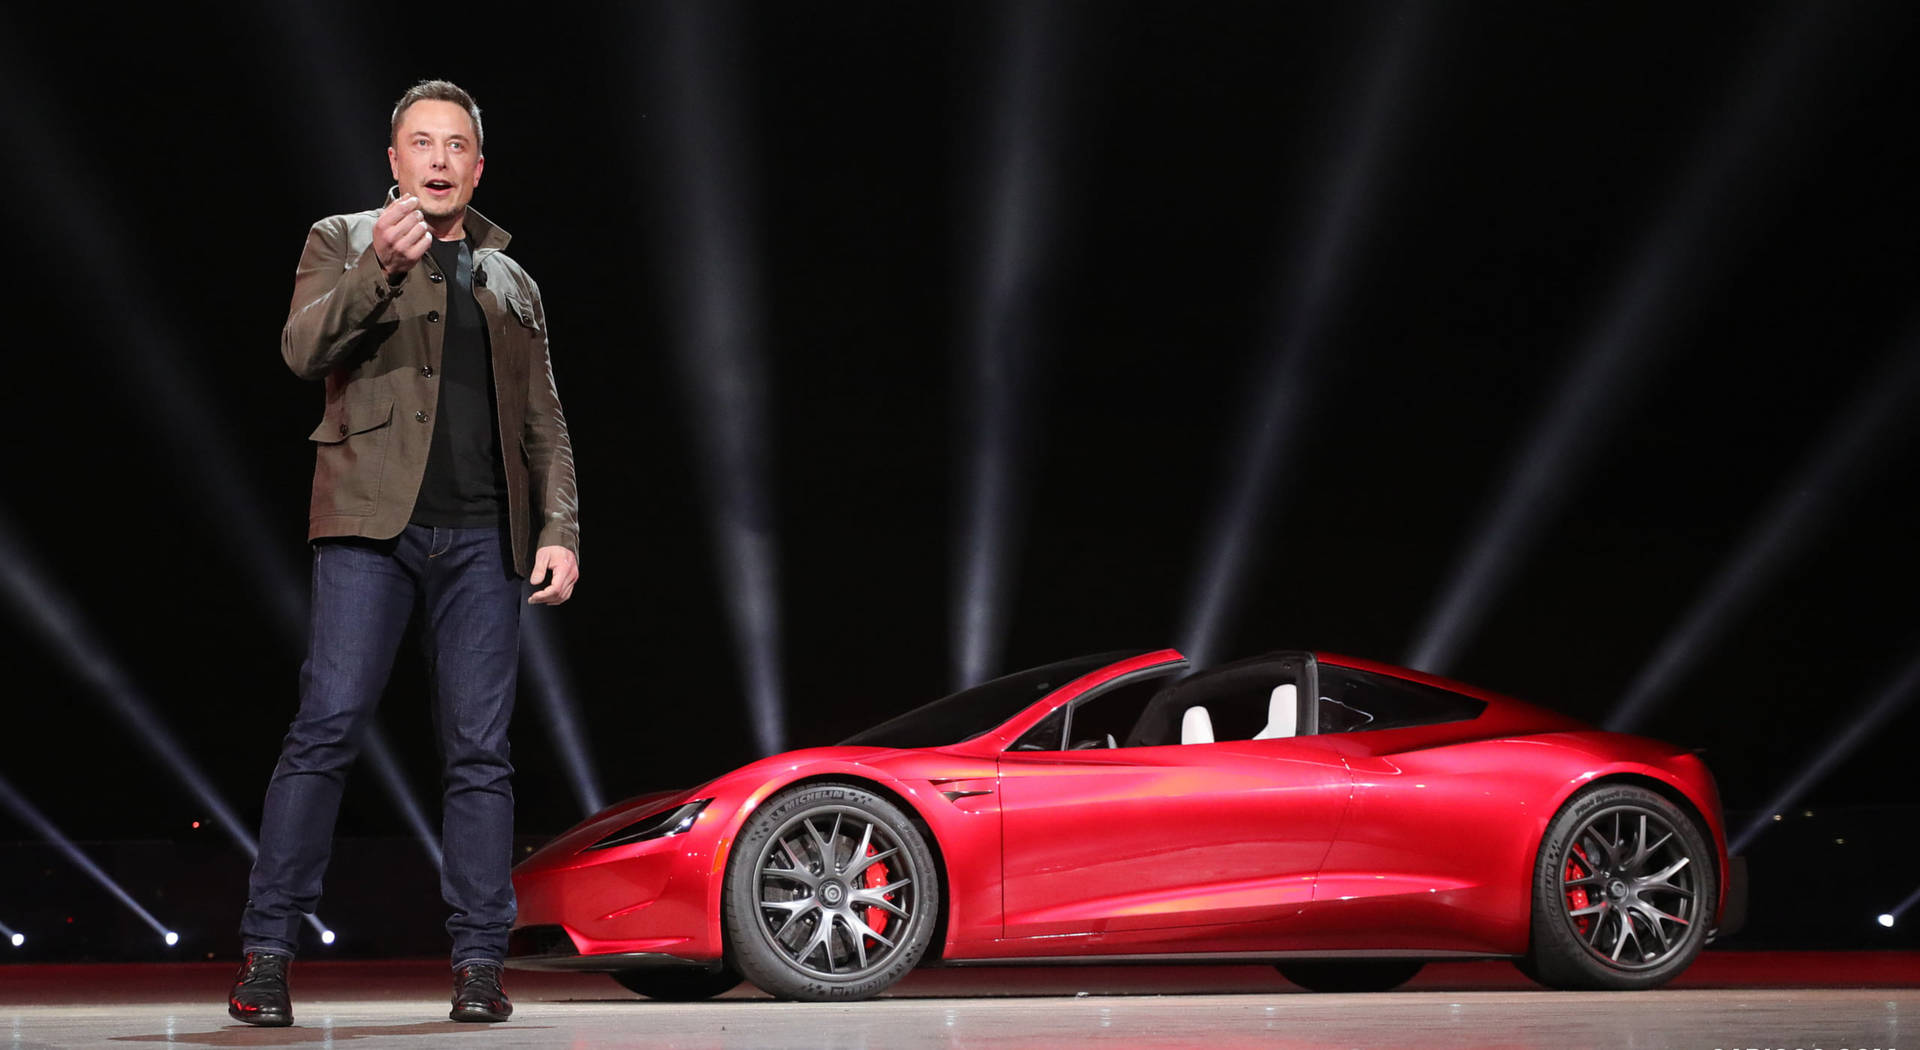 Elon Musk Tesla Roadster Launch 2017 Wallpaper